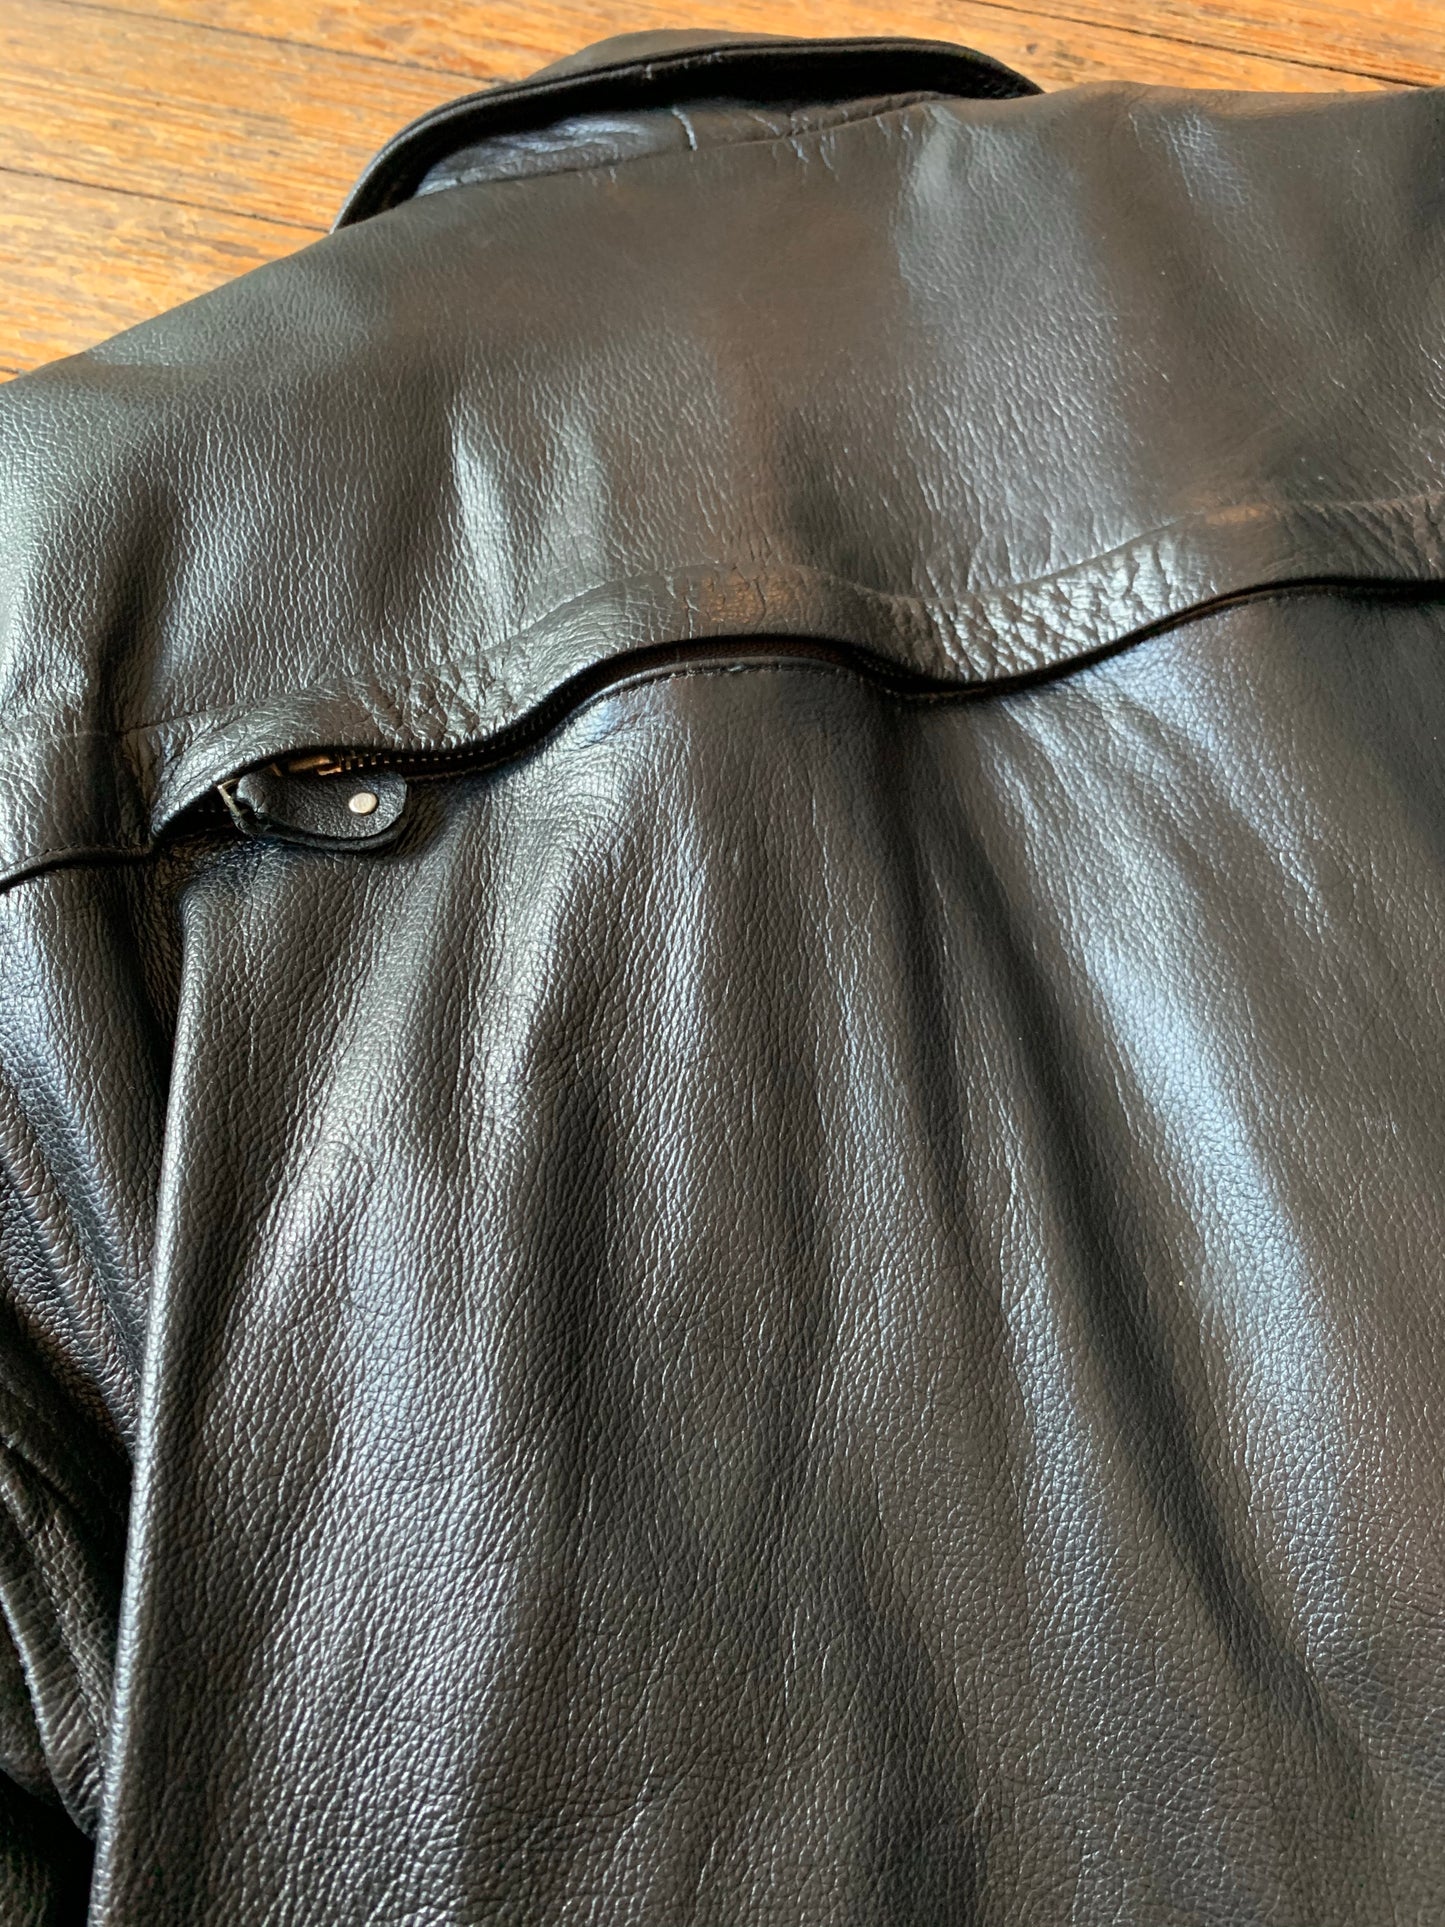 NWT Black Leather Jafrum Motorcycle Jacket w/ Zip Out Liner